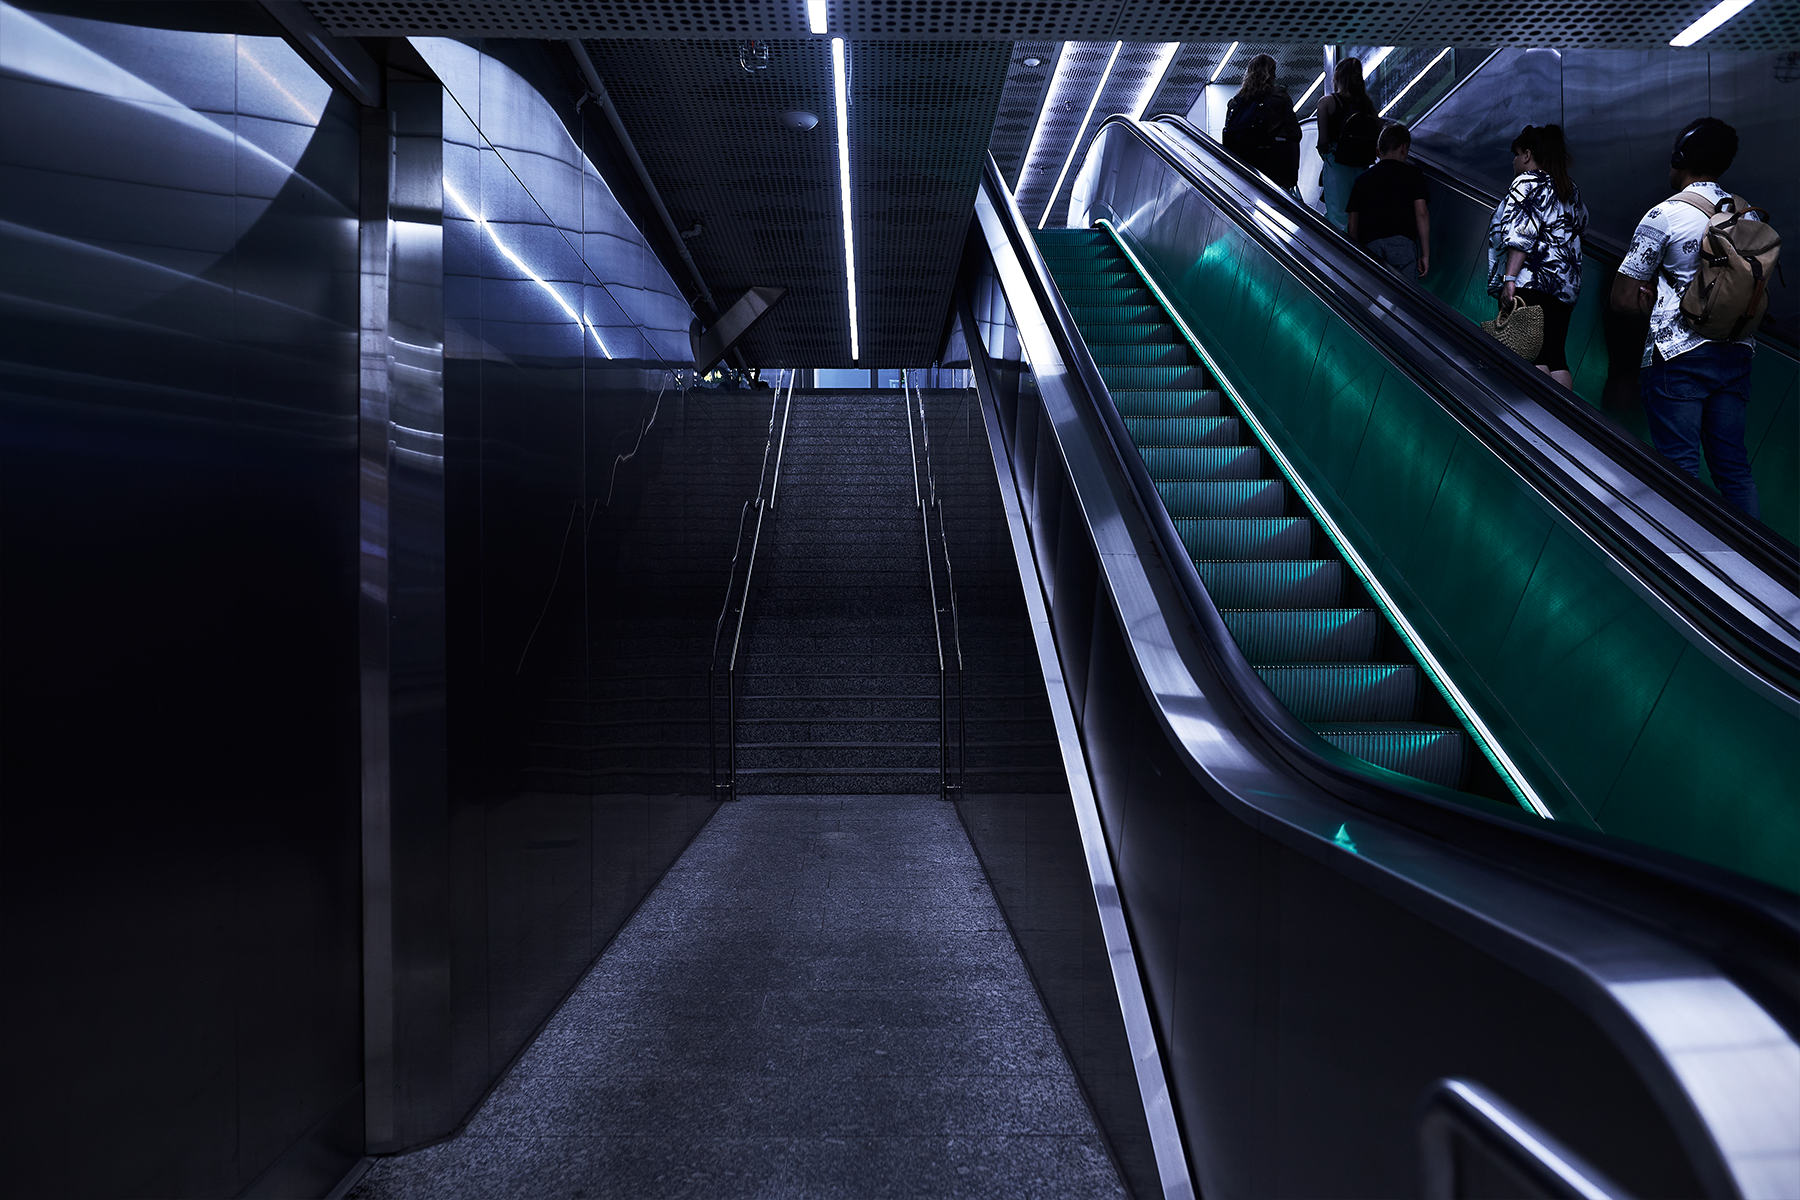 Illustration - dark blue and green picture of escalators.